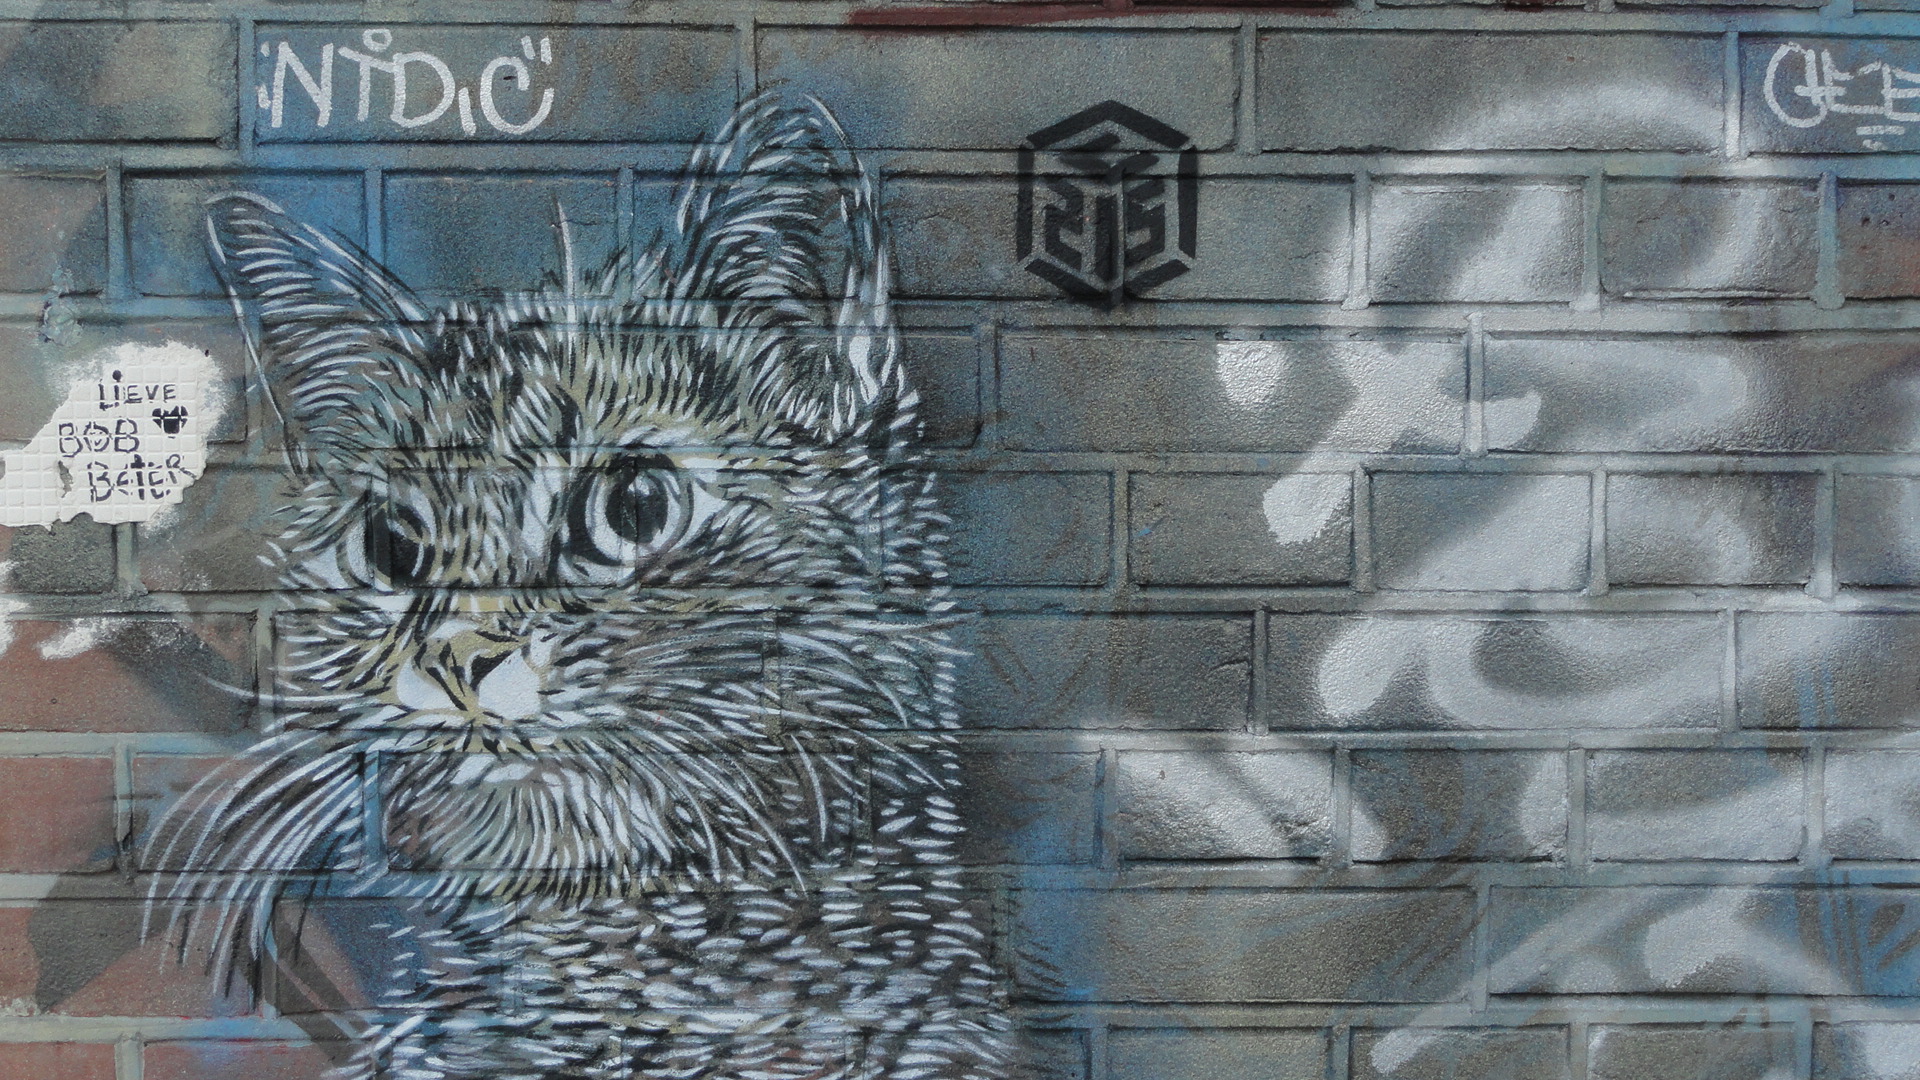 Amsterdam - Street art - Chat de C215